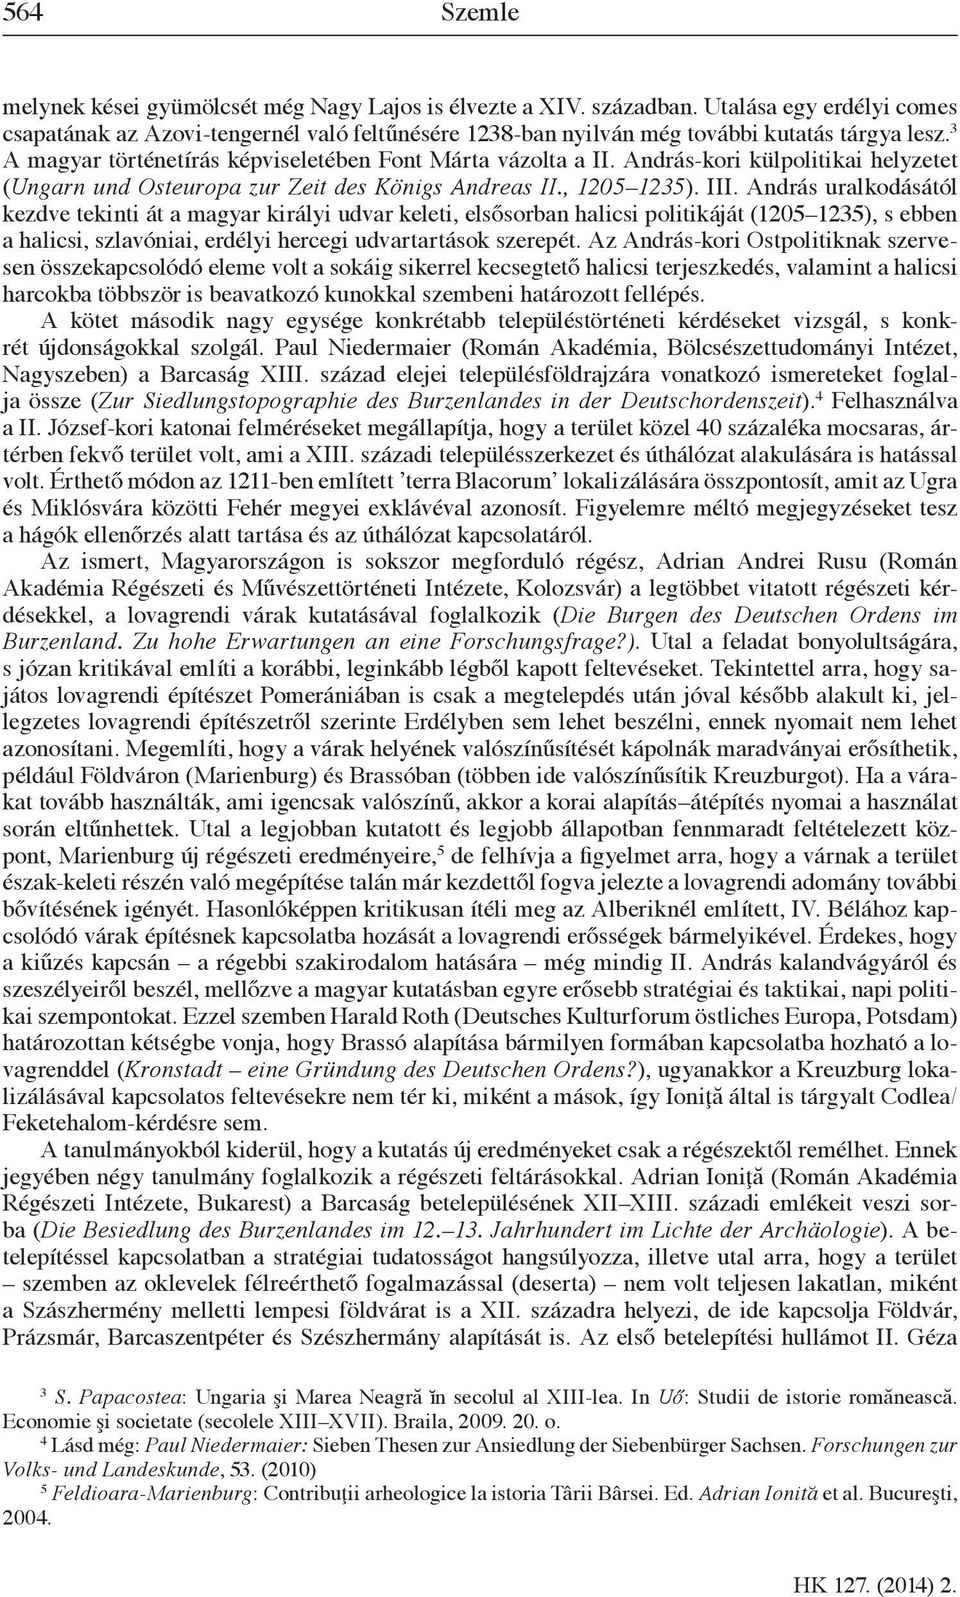 András-kori külpolitikai helyzetet (Ungarn und Osteuropa zur Zeit des Königs Andreas II., 1205 1235). III.